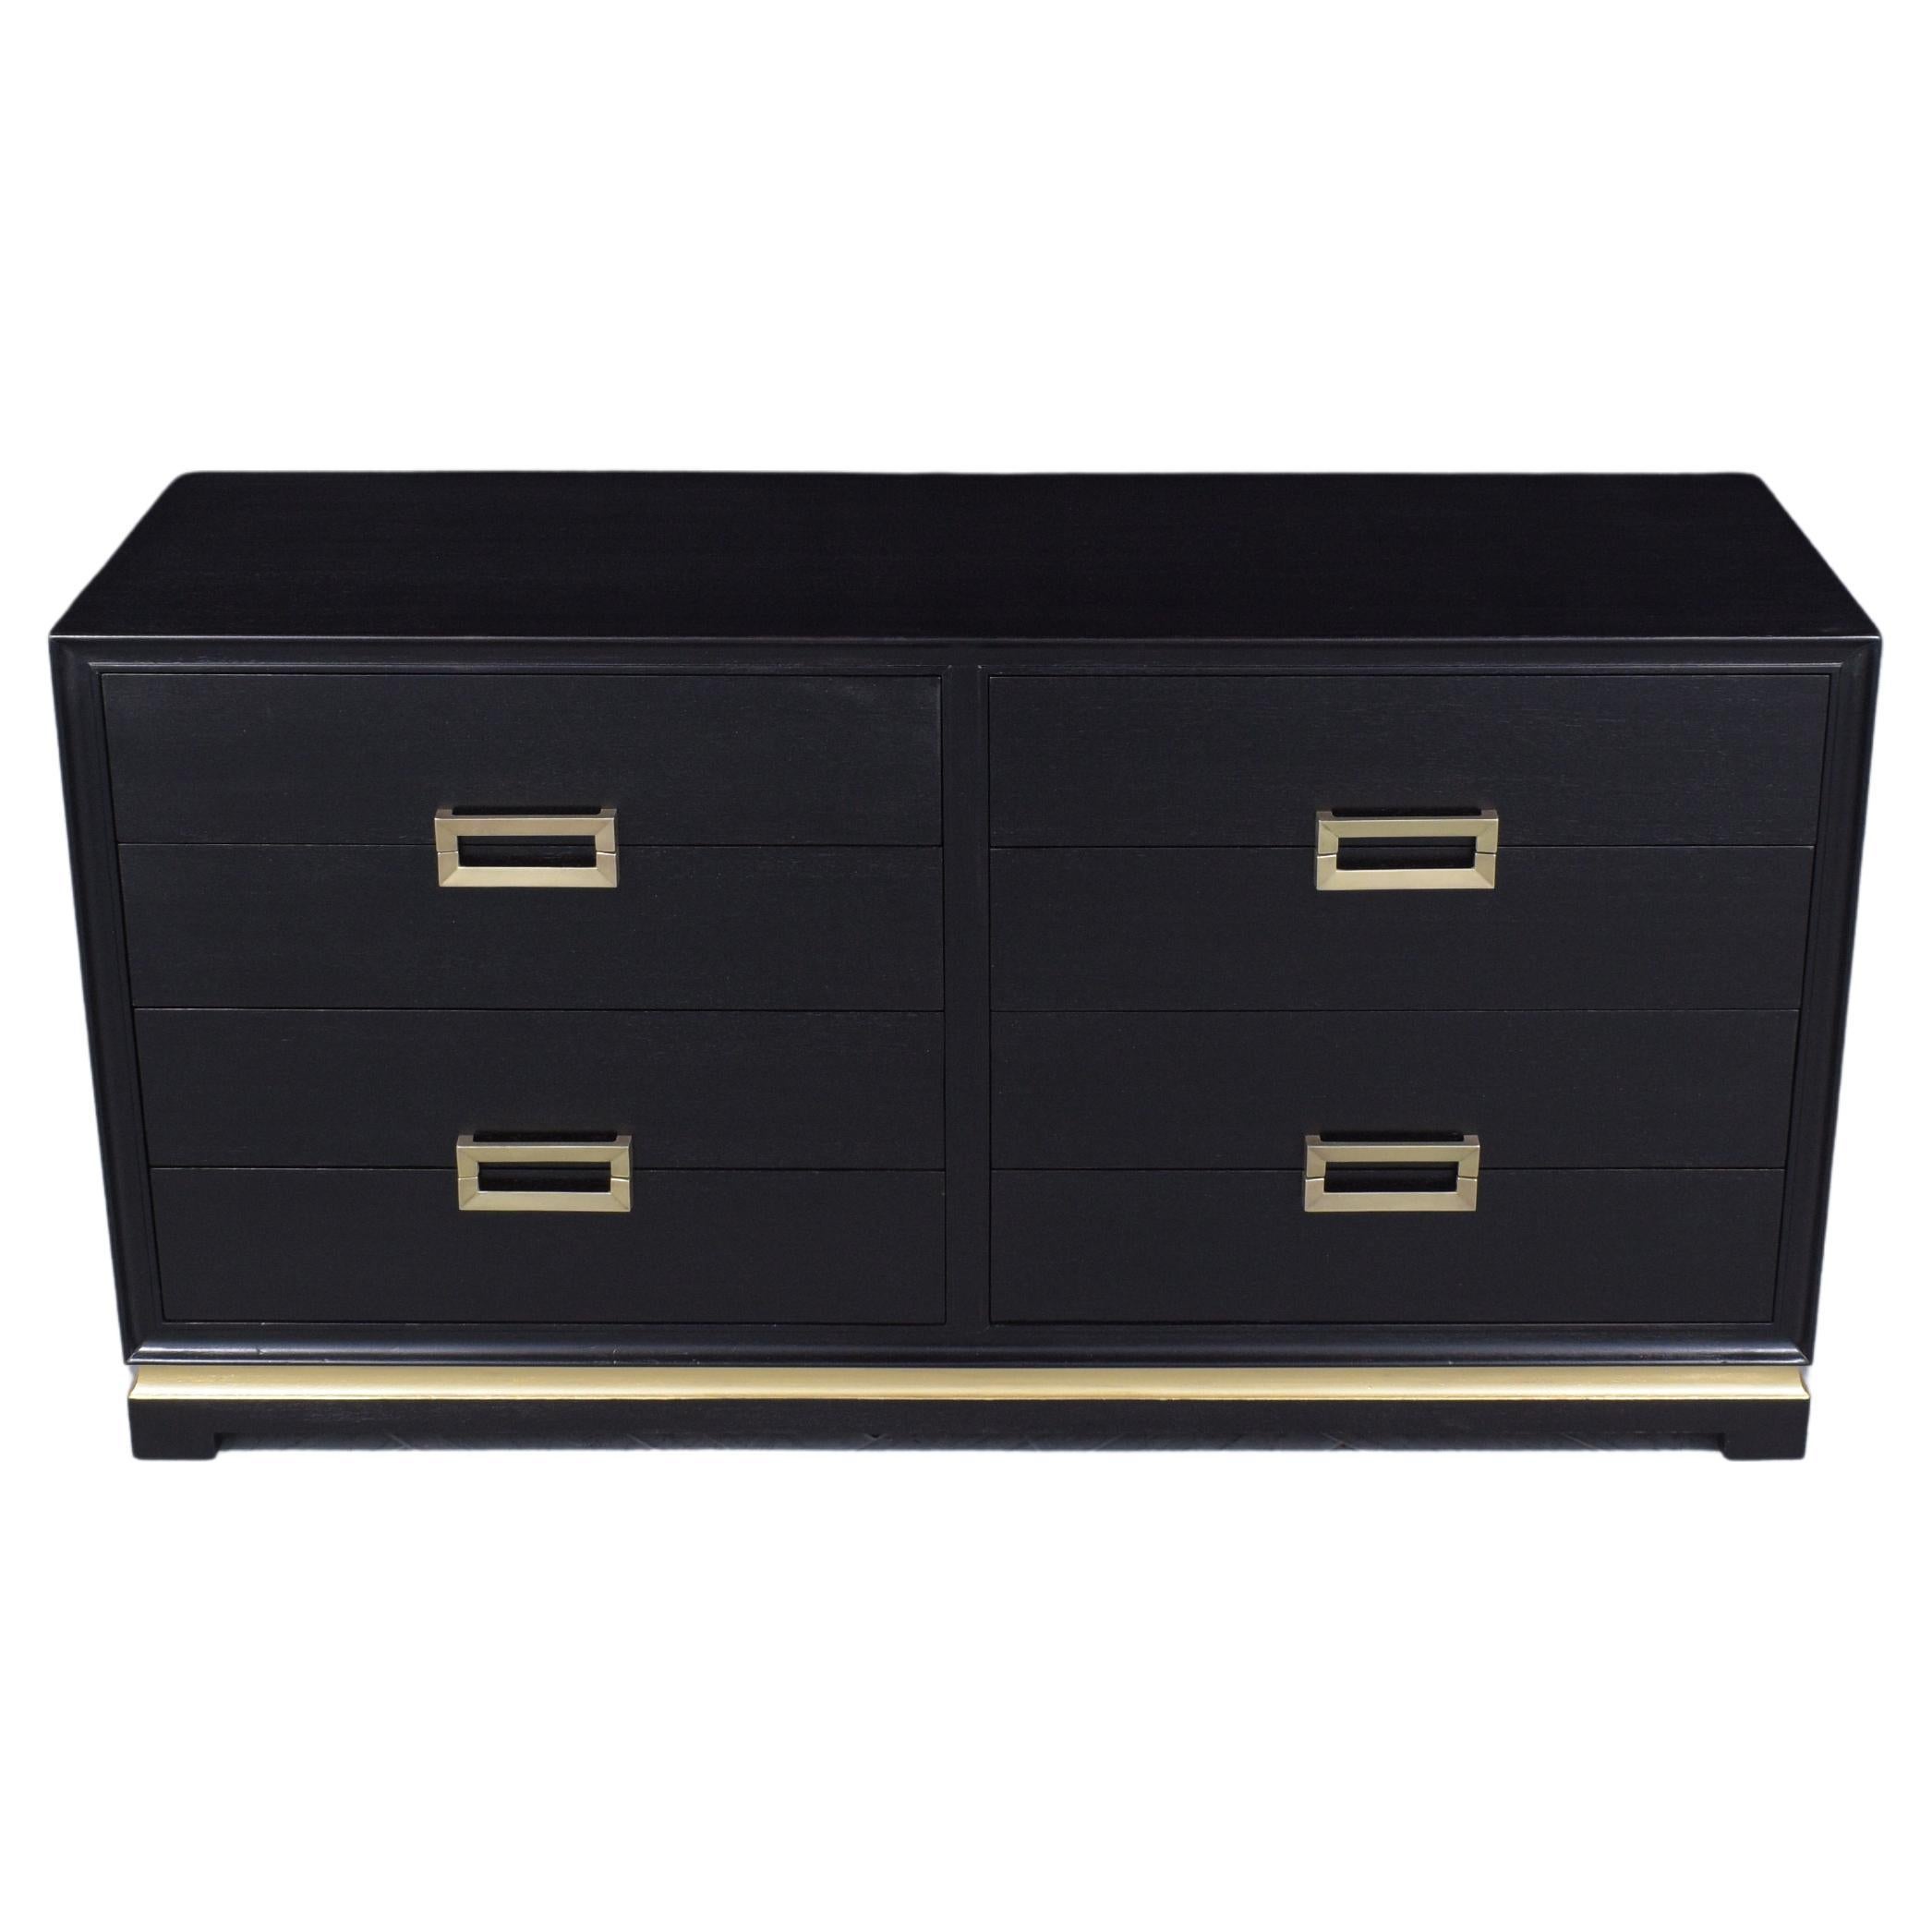 1960s Mid-Century Modern Mahogany Dresser: Timeless Elegance Restored